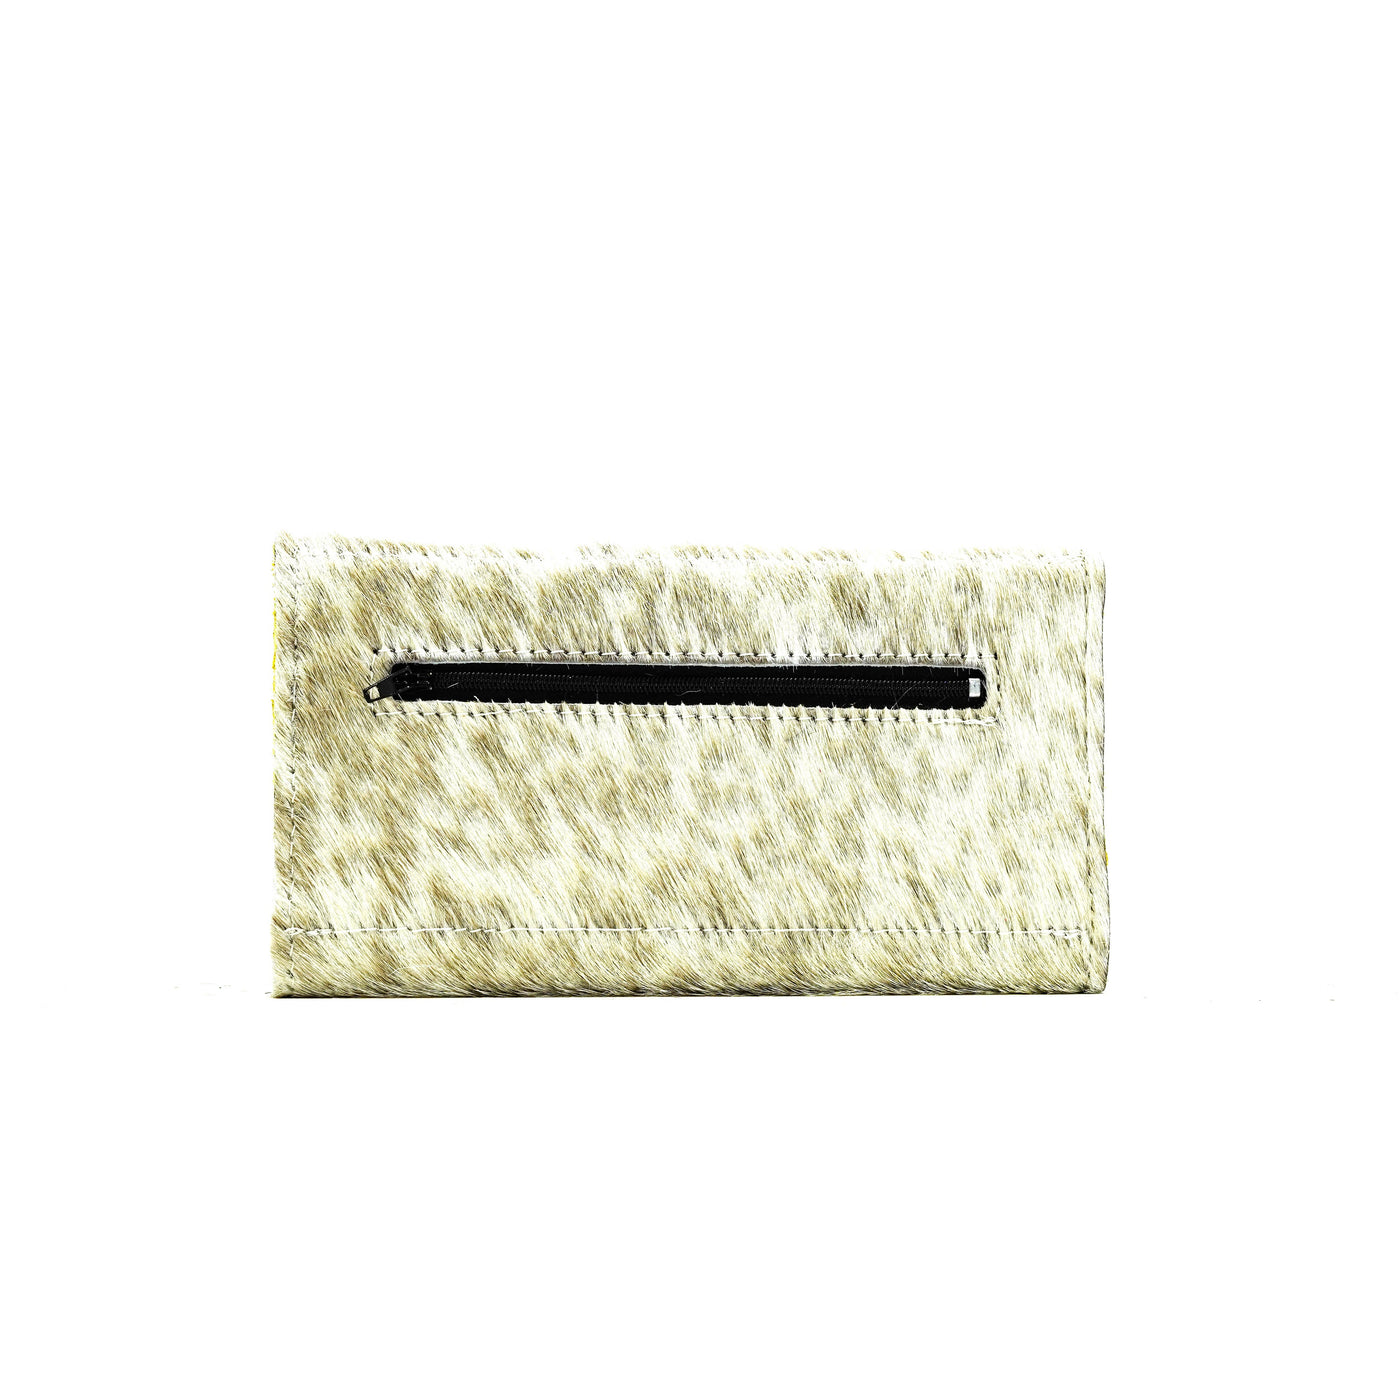 Kacey Wallet - Light Brindle w/ Galaxy Tool-Kacey Wallet-Western-Cowhide-Bags-Handmade-Products-Gifts-Dancing Cactus Designs